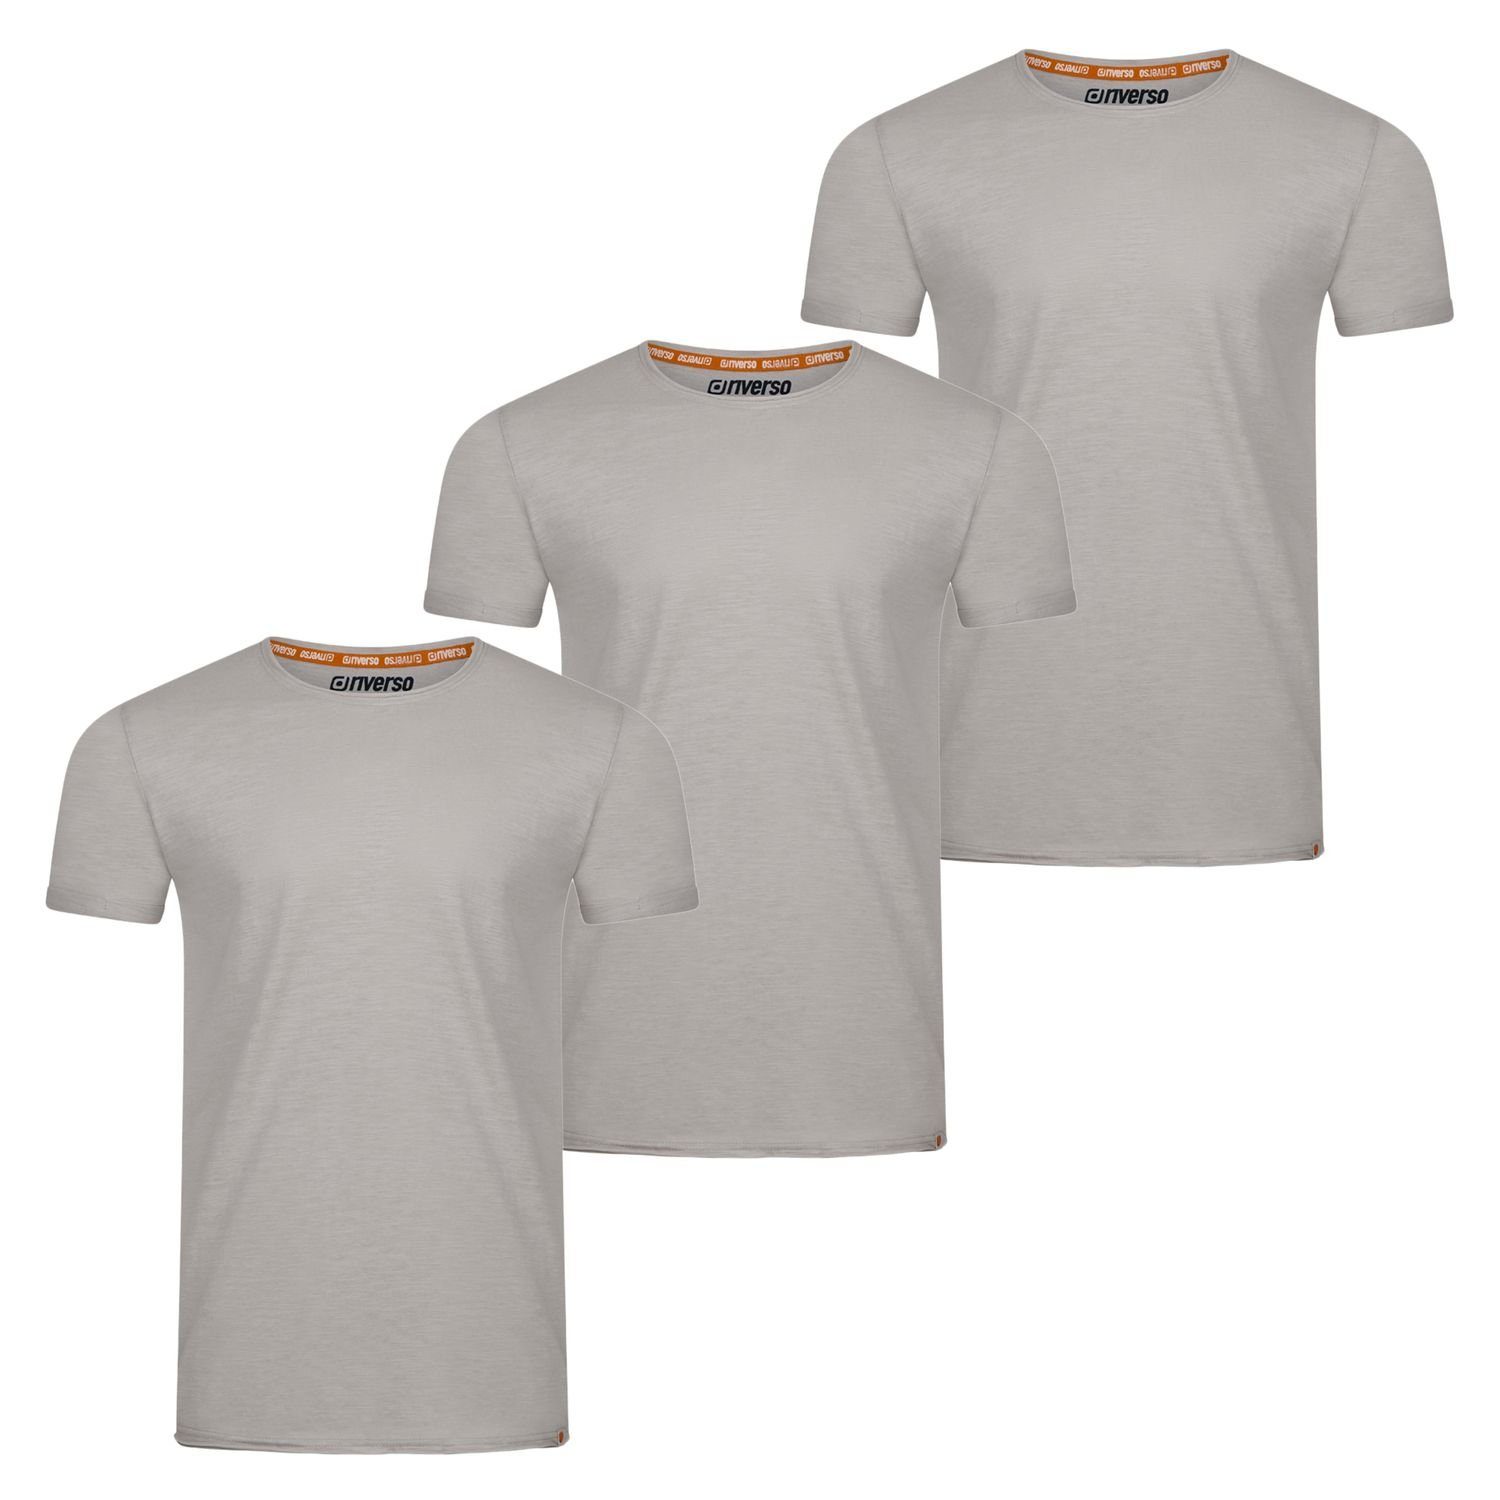 Shirt aus Herren T-Shirt 100% Baumwolle Shirt (3-tlg) Grey Rundhalsausschnitt Tee Smoke Regular RIVLenny Fit Basic Kurzarm mit riverso